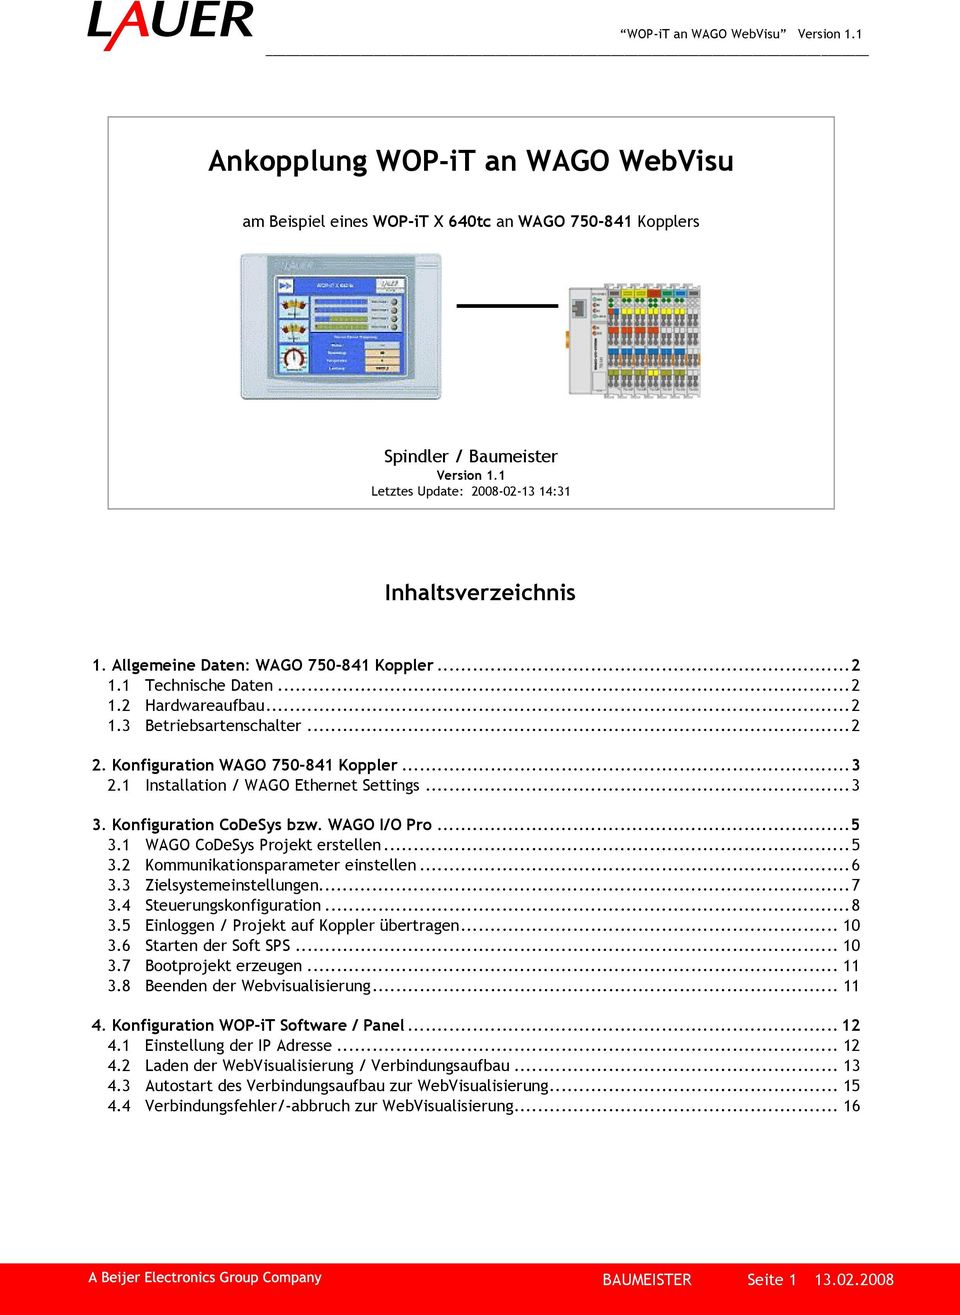 1 Installation / WAGO Ethernet Settings...3 3. Konfiguration CoDeSys bzw. WAGO I/O Pro...5 3.1 WAGO CoDeSys Projekt erstellen...5 3.2 Kommunikationsparameter einstellen...6 3.